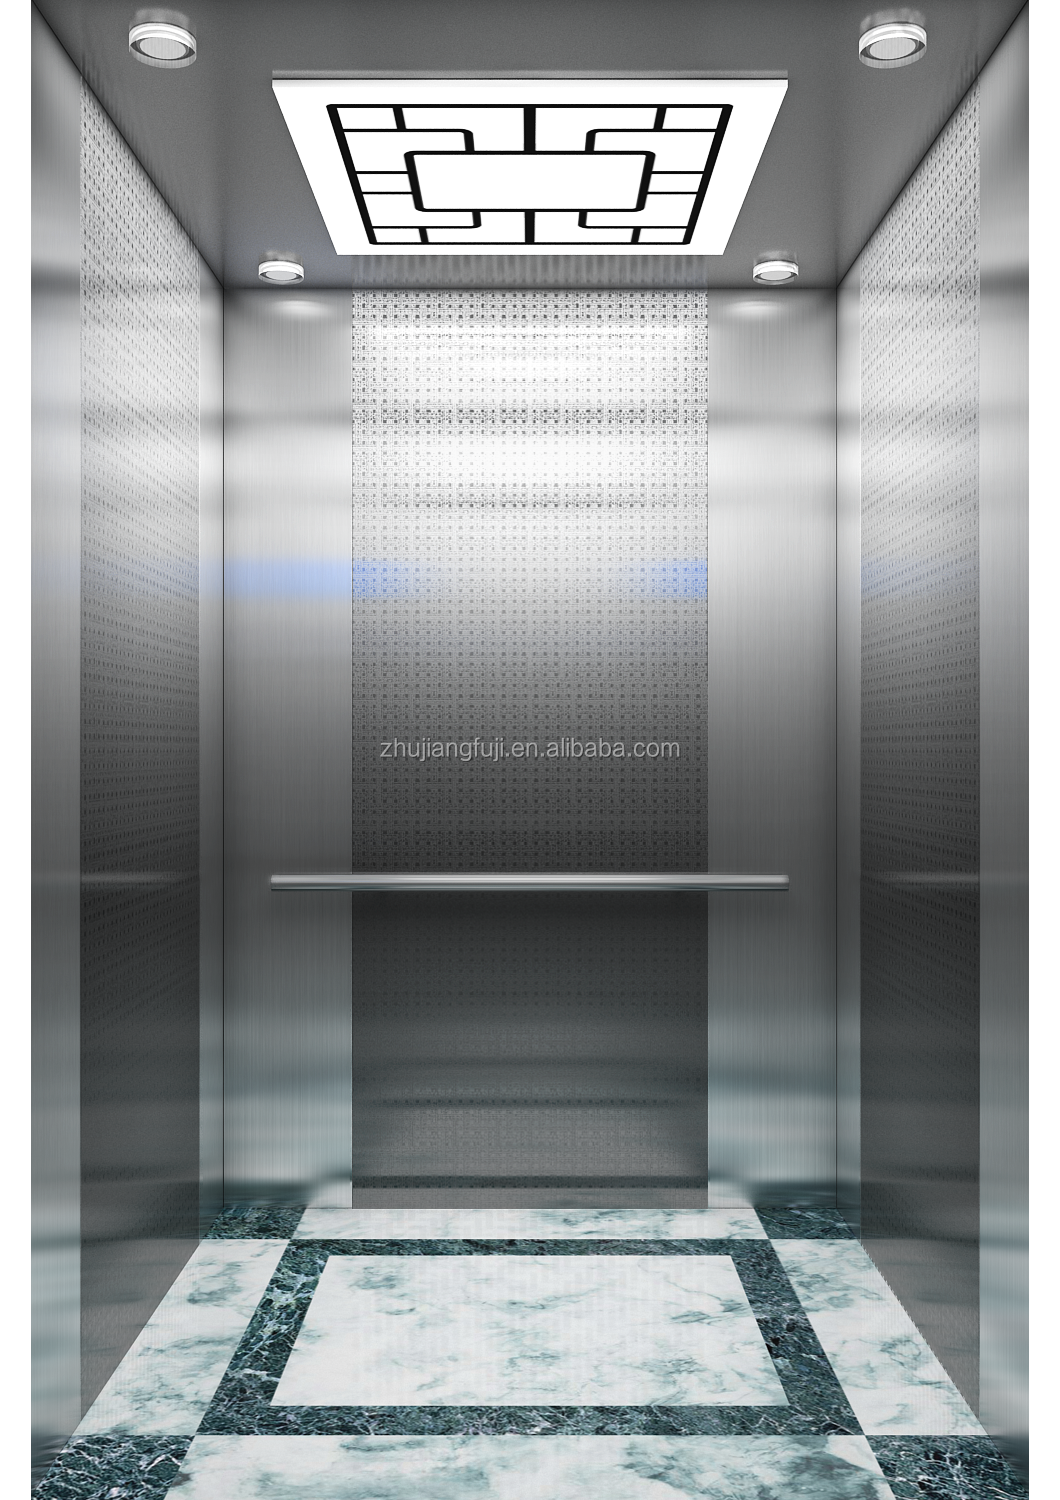 ZhuJiangFuJi Gearless Motor Passenger Elevator Lift elevator lift passenger